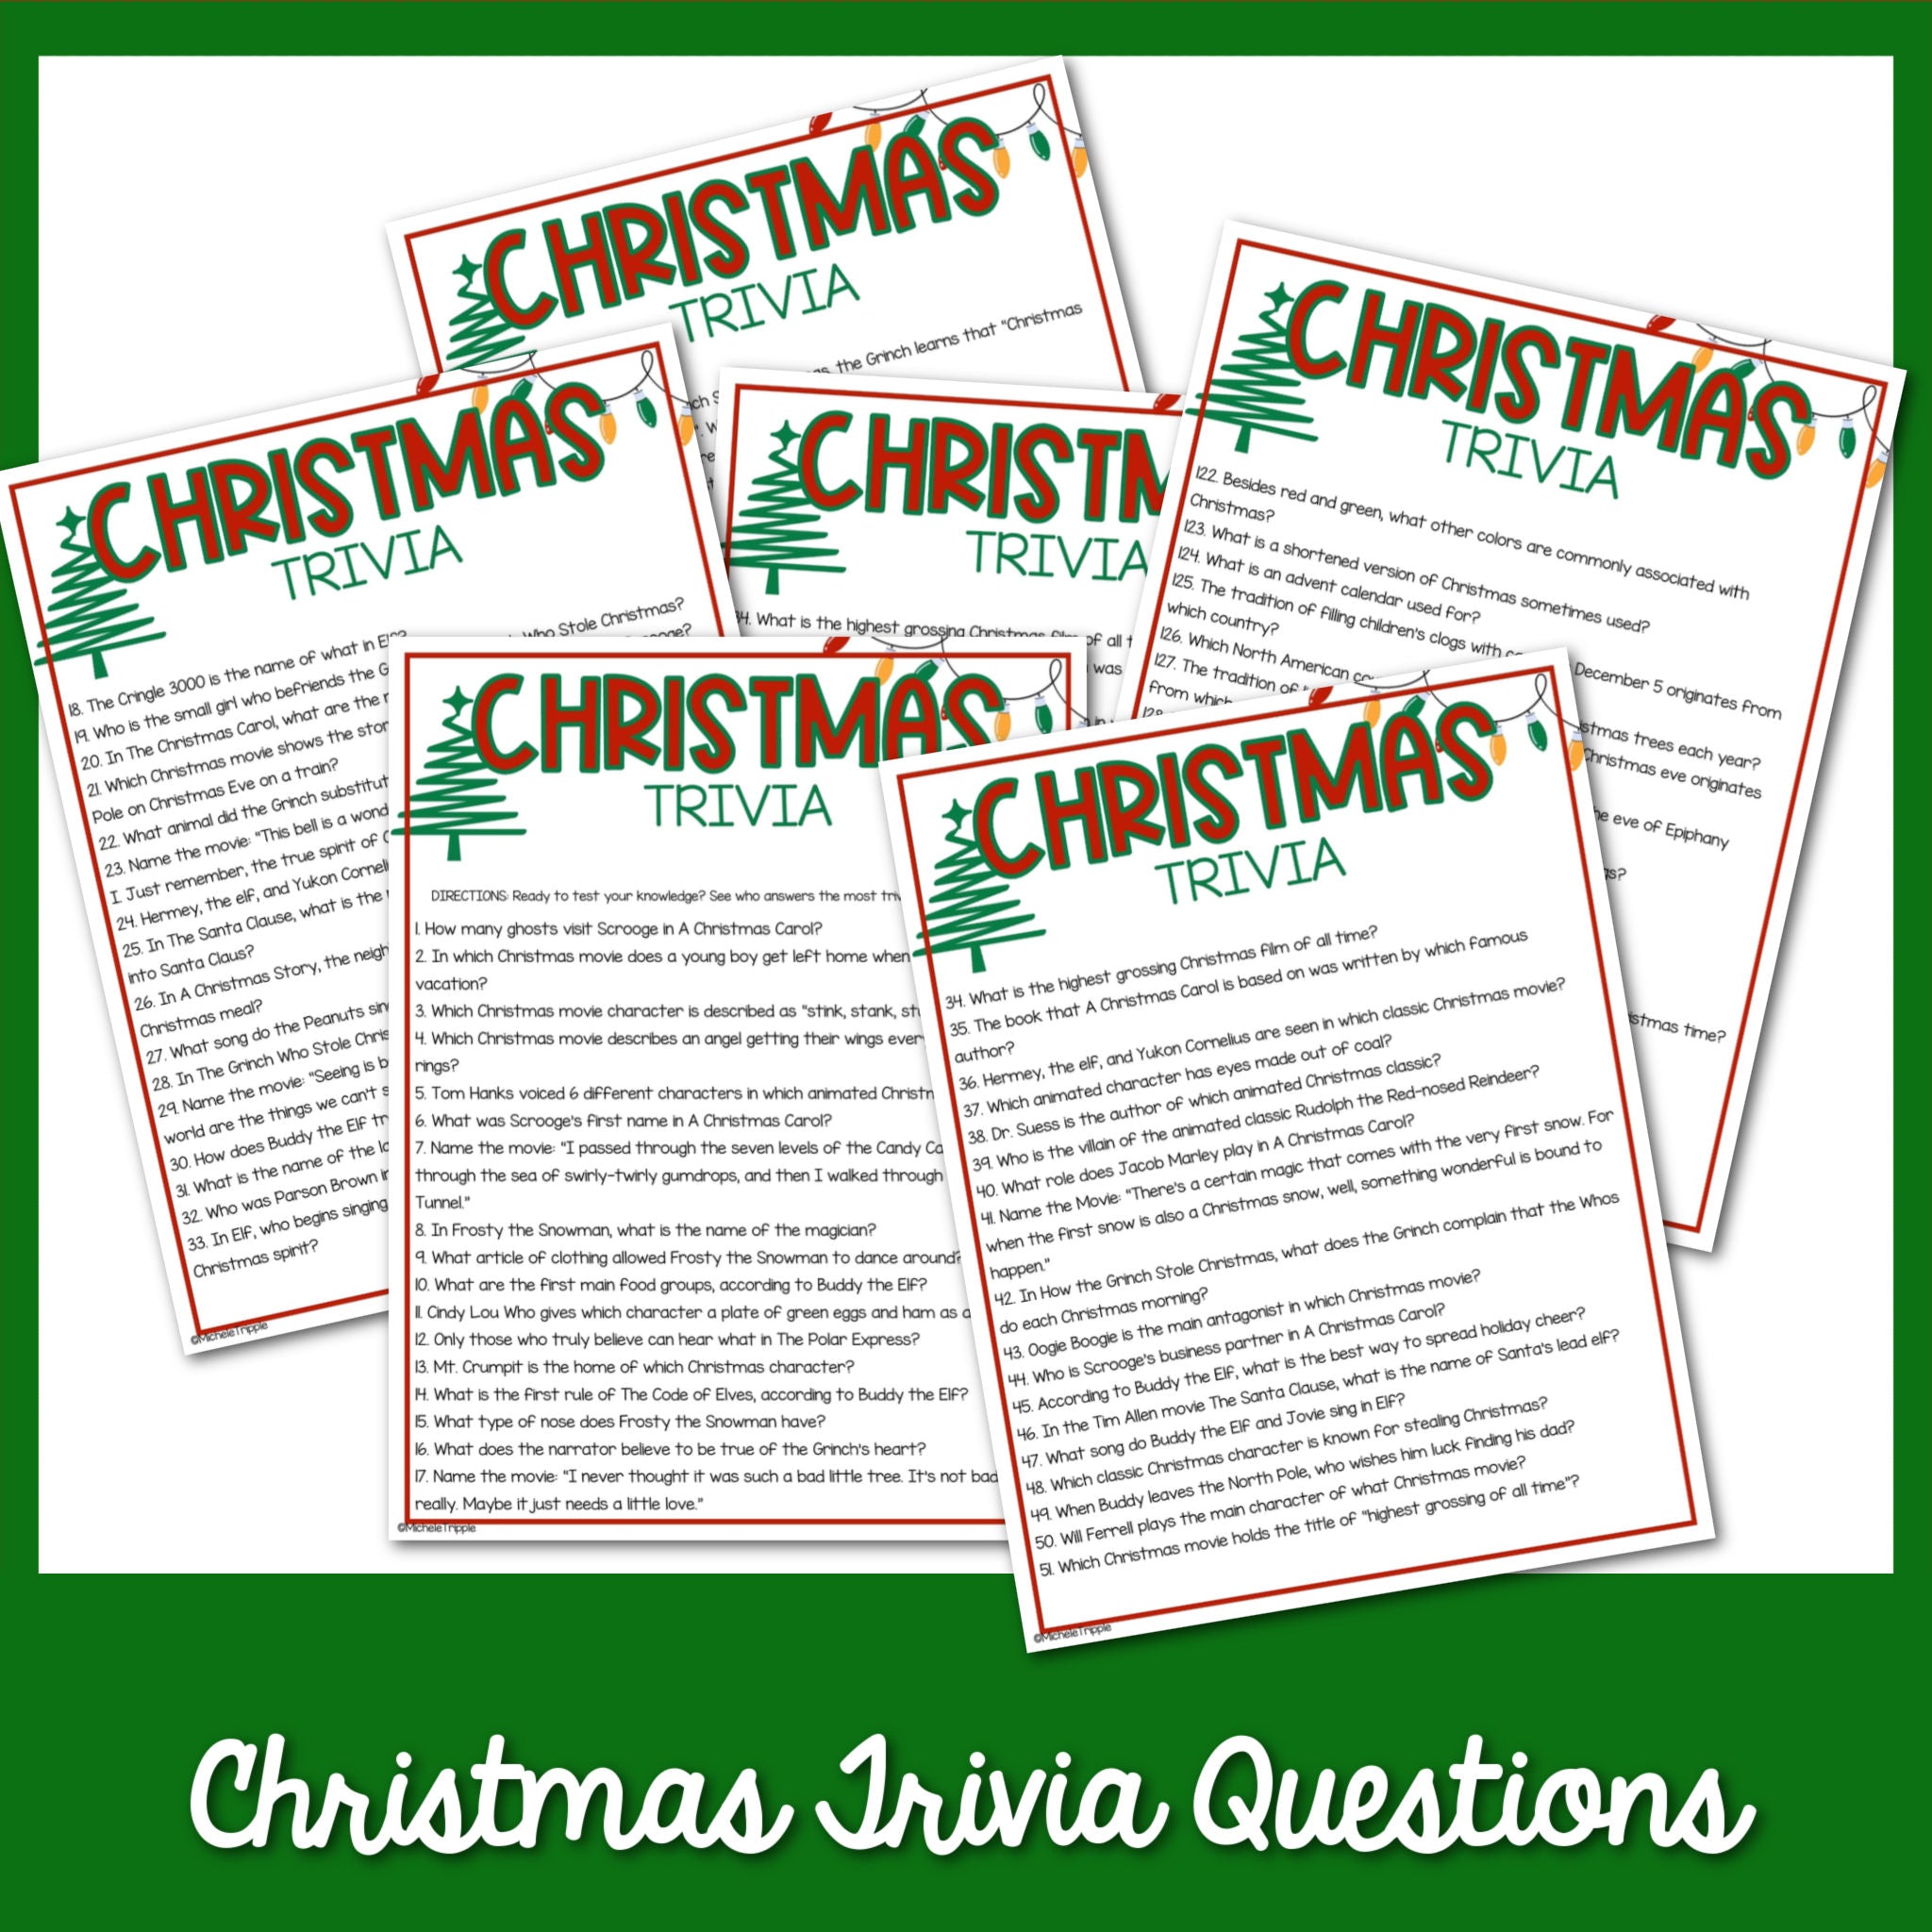 Christmas Trivia Questions